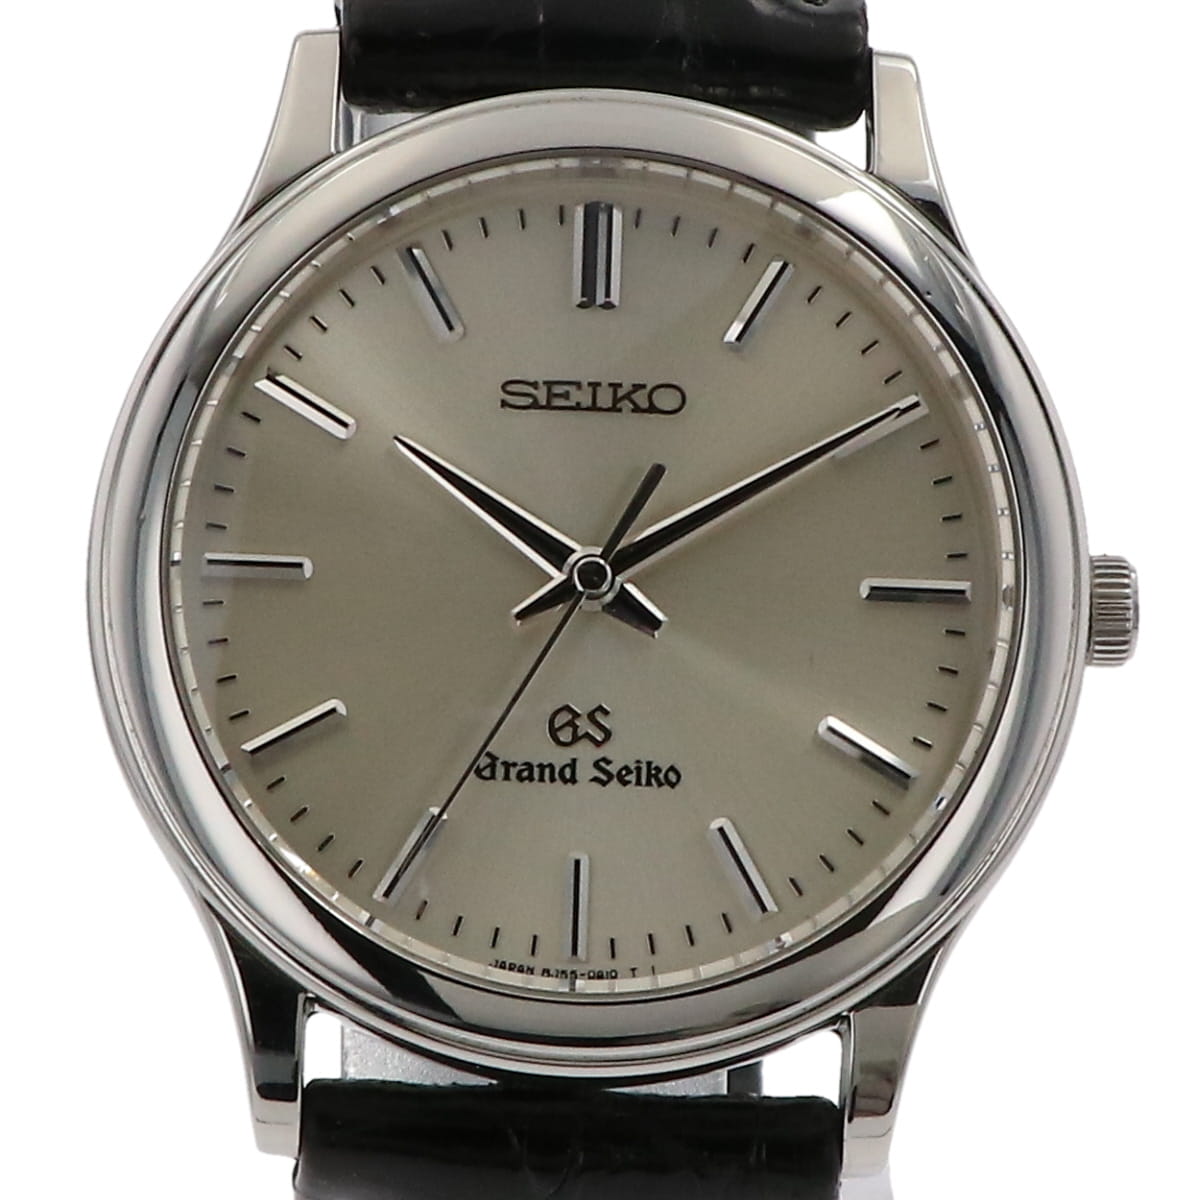 Wrapping target] Seiko SEIKO Grand Seiko SBGF015 8J55-0A10 watch